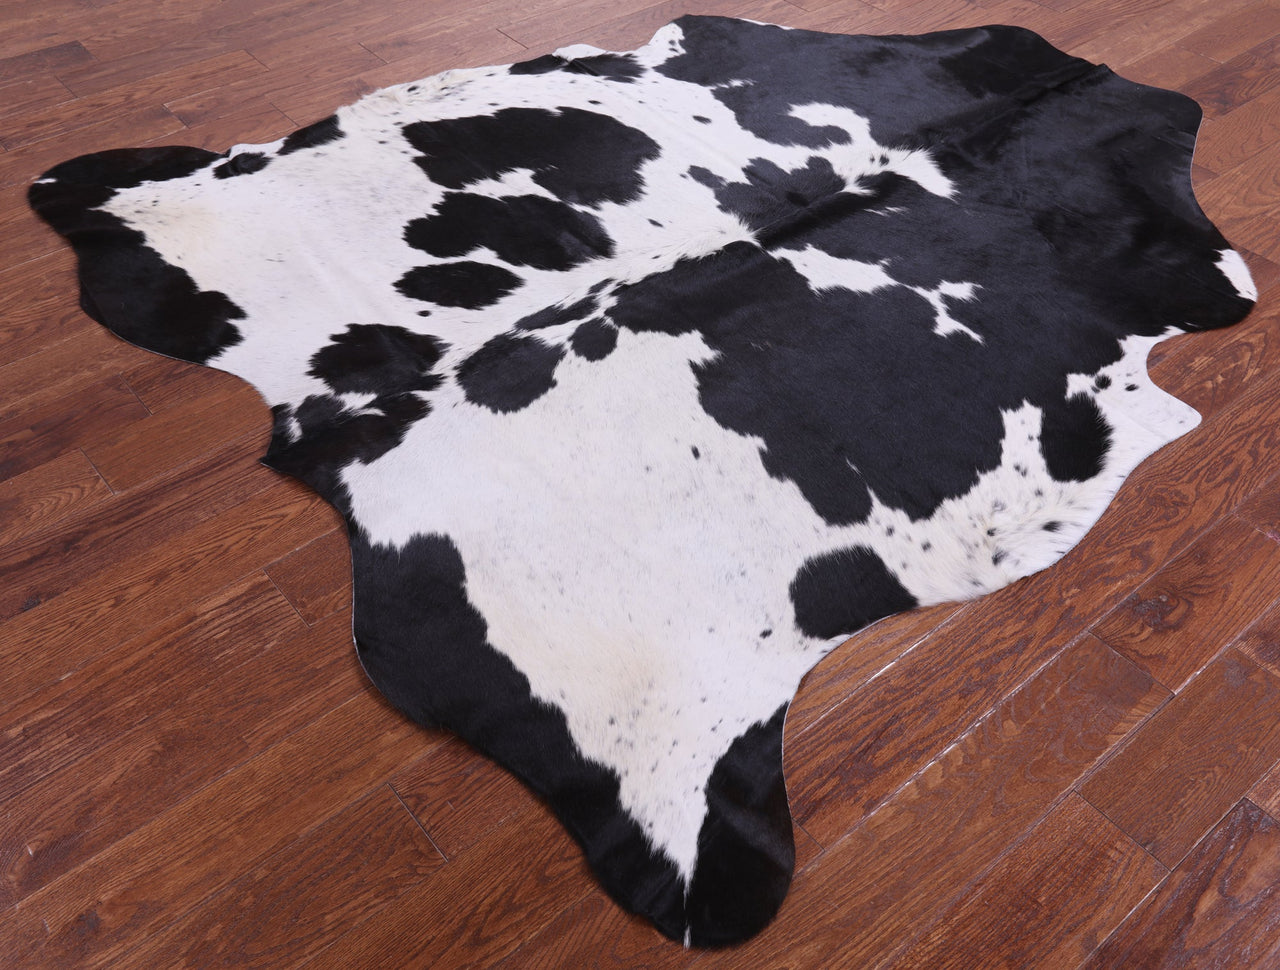 Black & White Natural Cowhide Rug - Large 6'11"H x 6'6"W